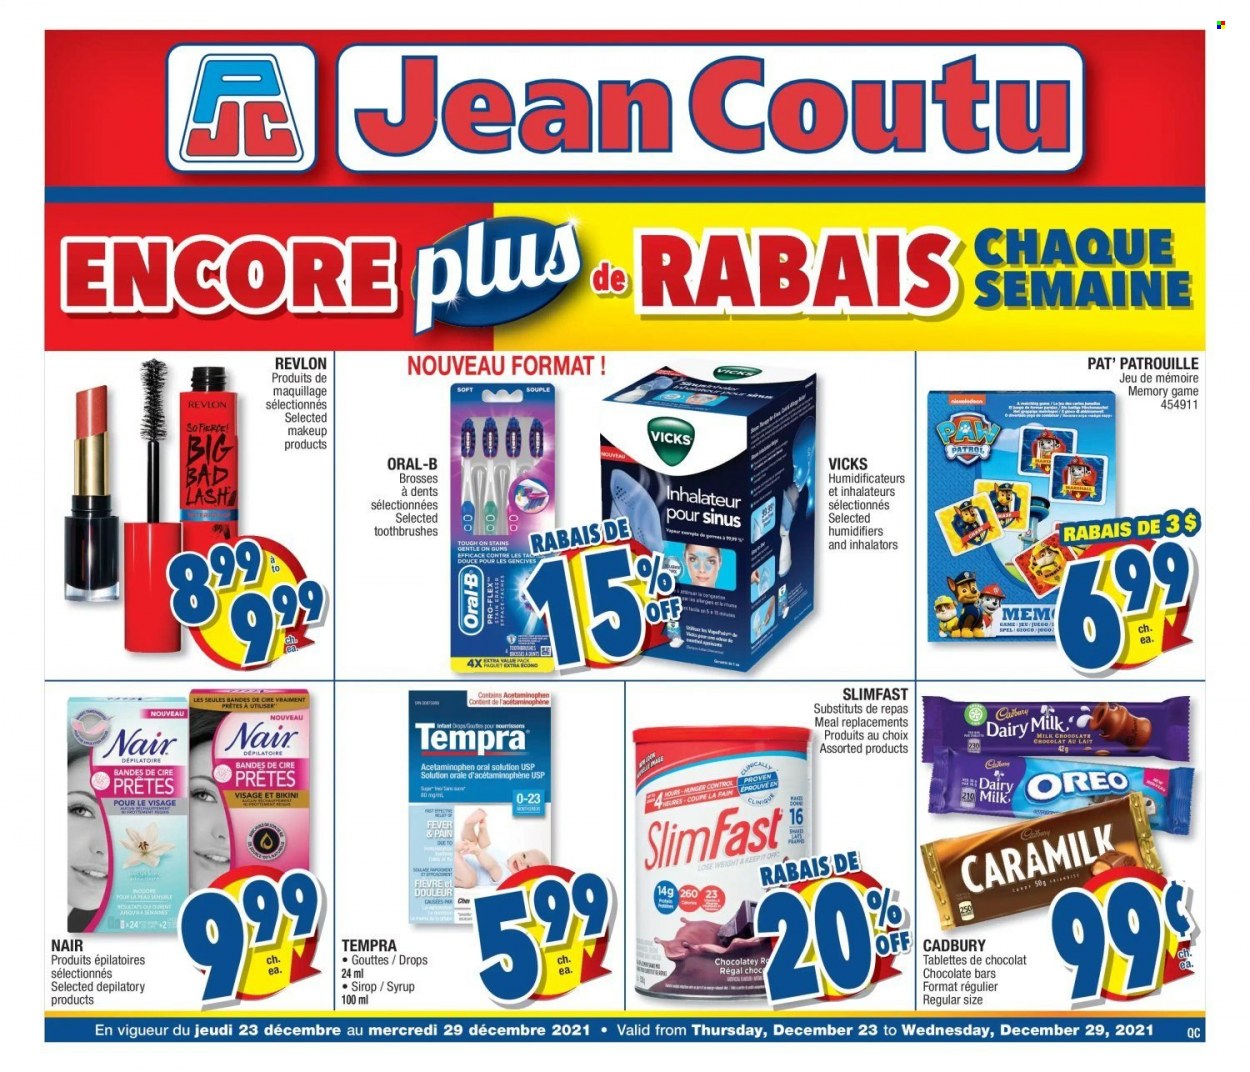 thumbnail - Jean Coutu Flyer - December 23, 2021 - December 29, 2021 - Sales products - Cadbury, Dairy Milk, Slimfast, chocolate bar, syrup, Revlon, Vicks, makeup, Oreo, bikini, Oral-B. Page 1.